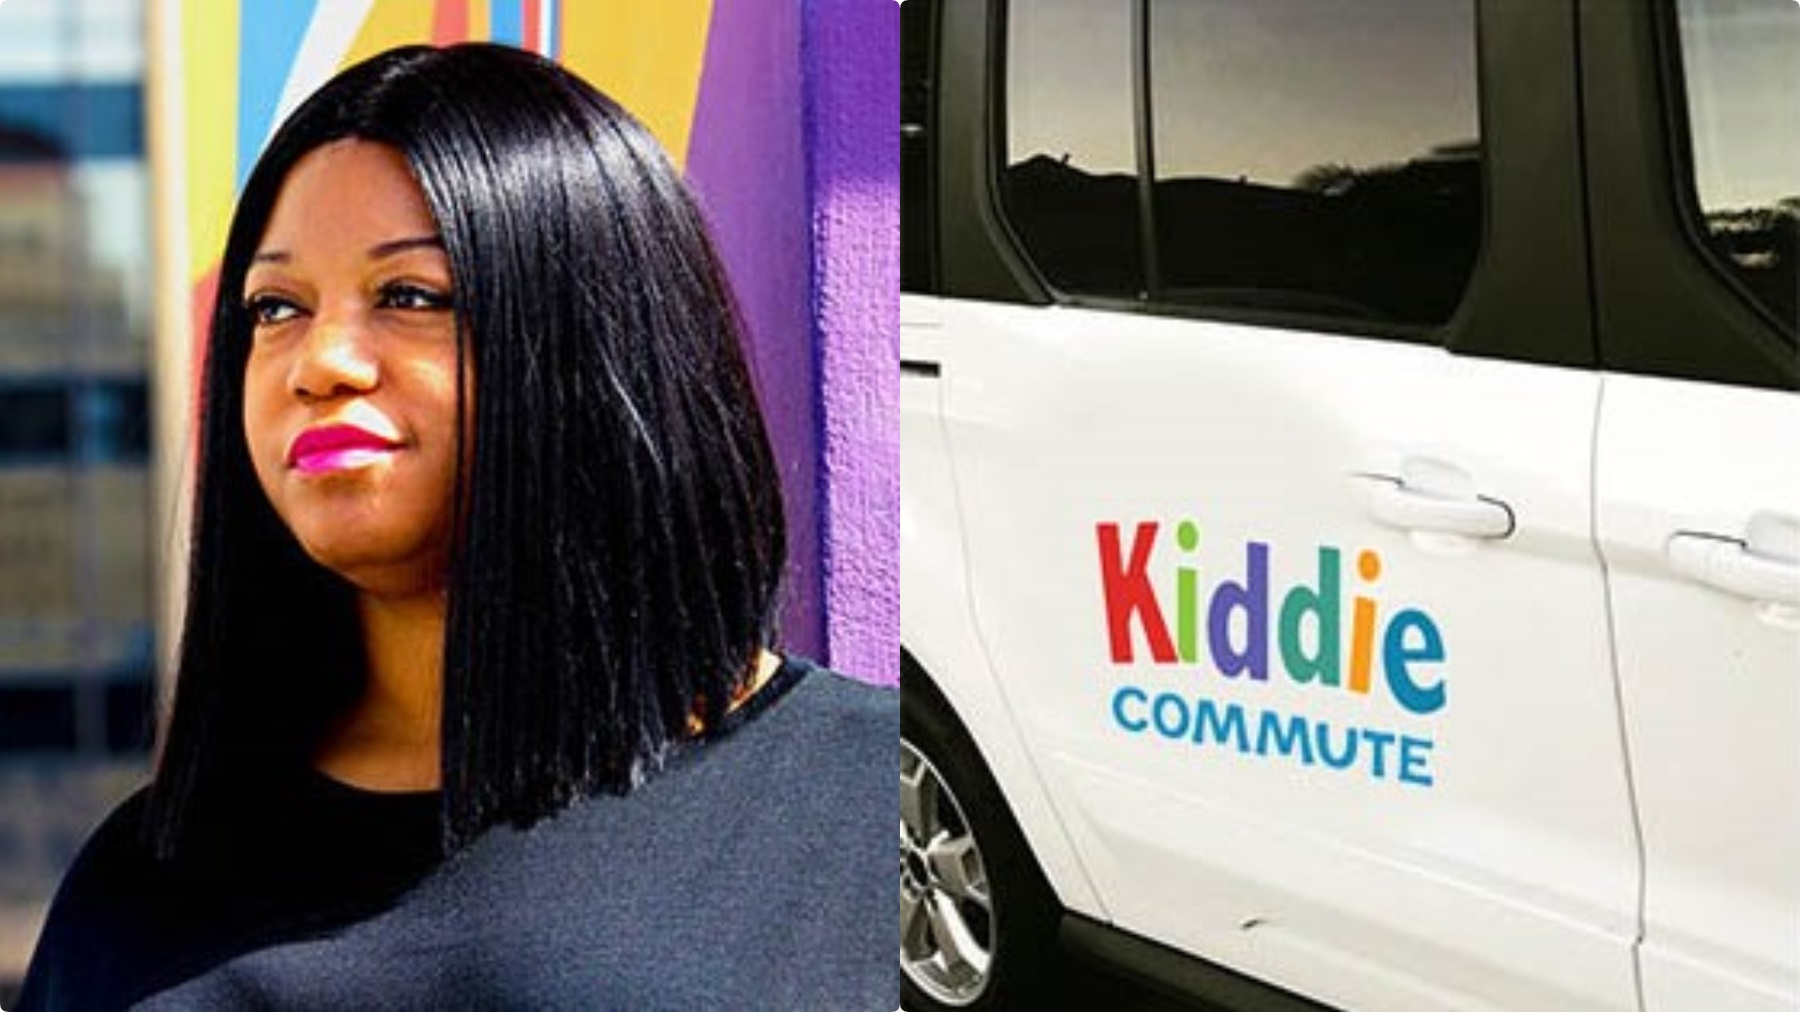 Kiddie Commute: Black woman with 3 kids starts transport service for children